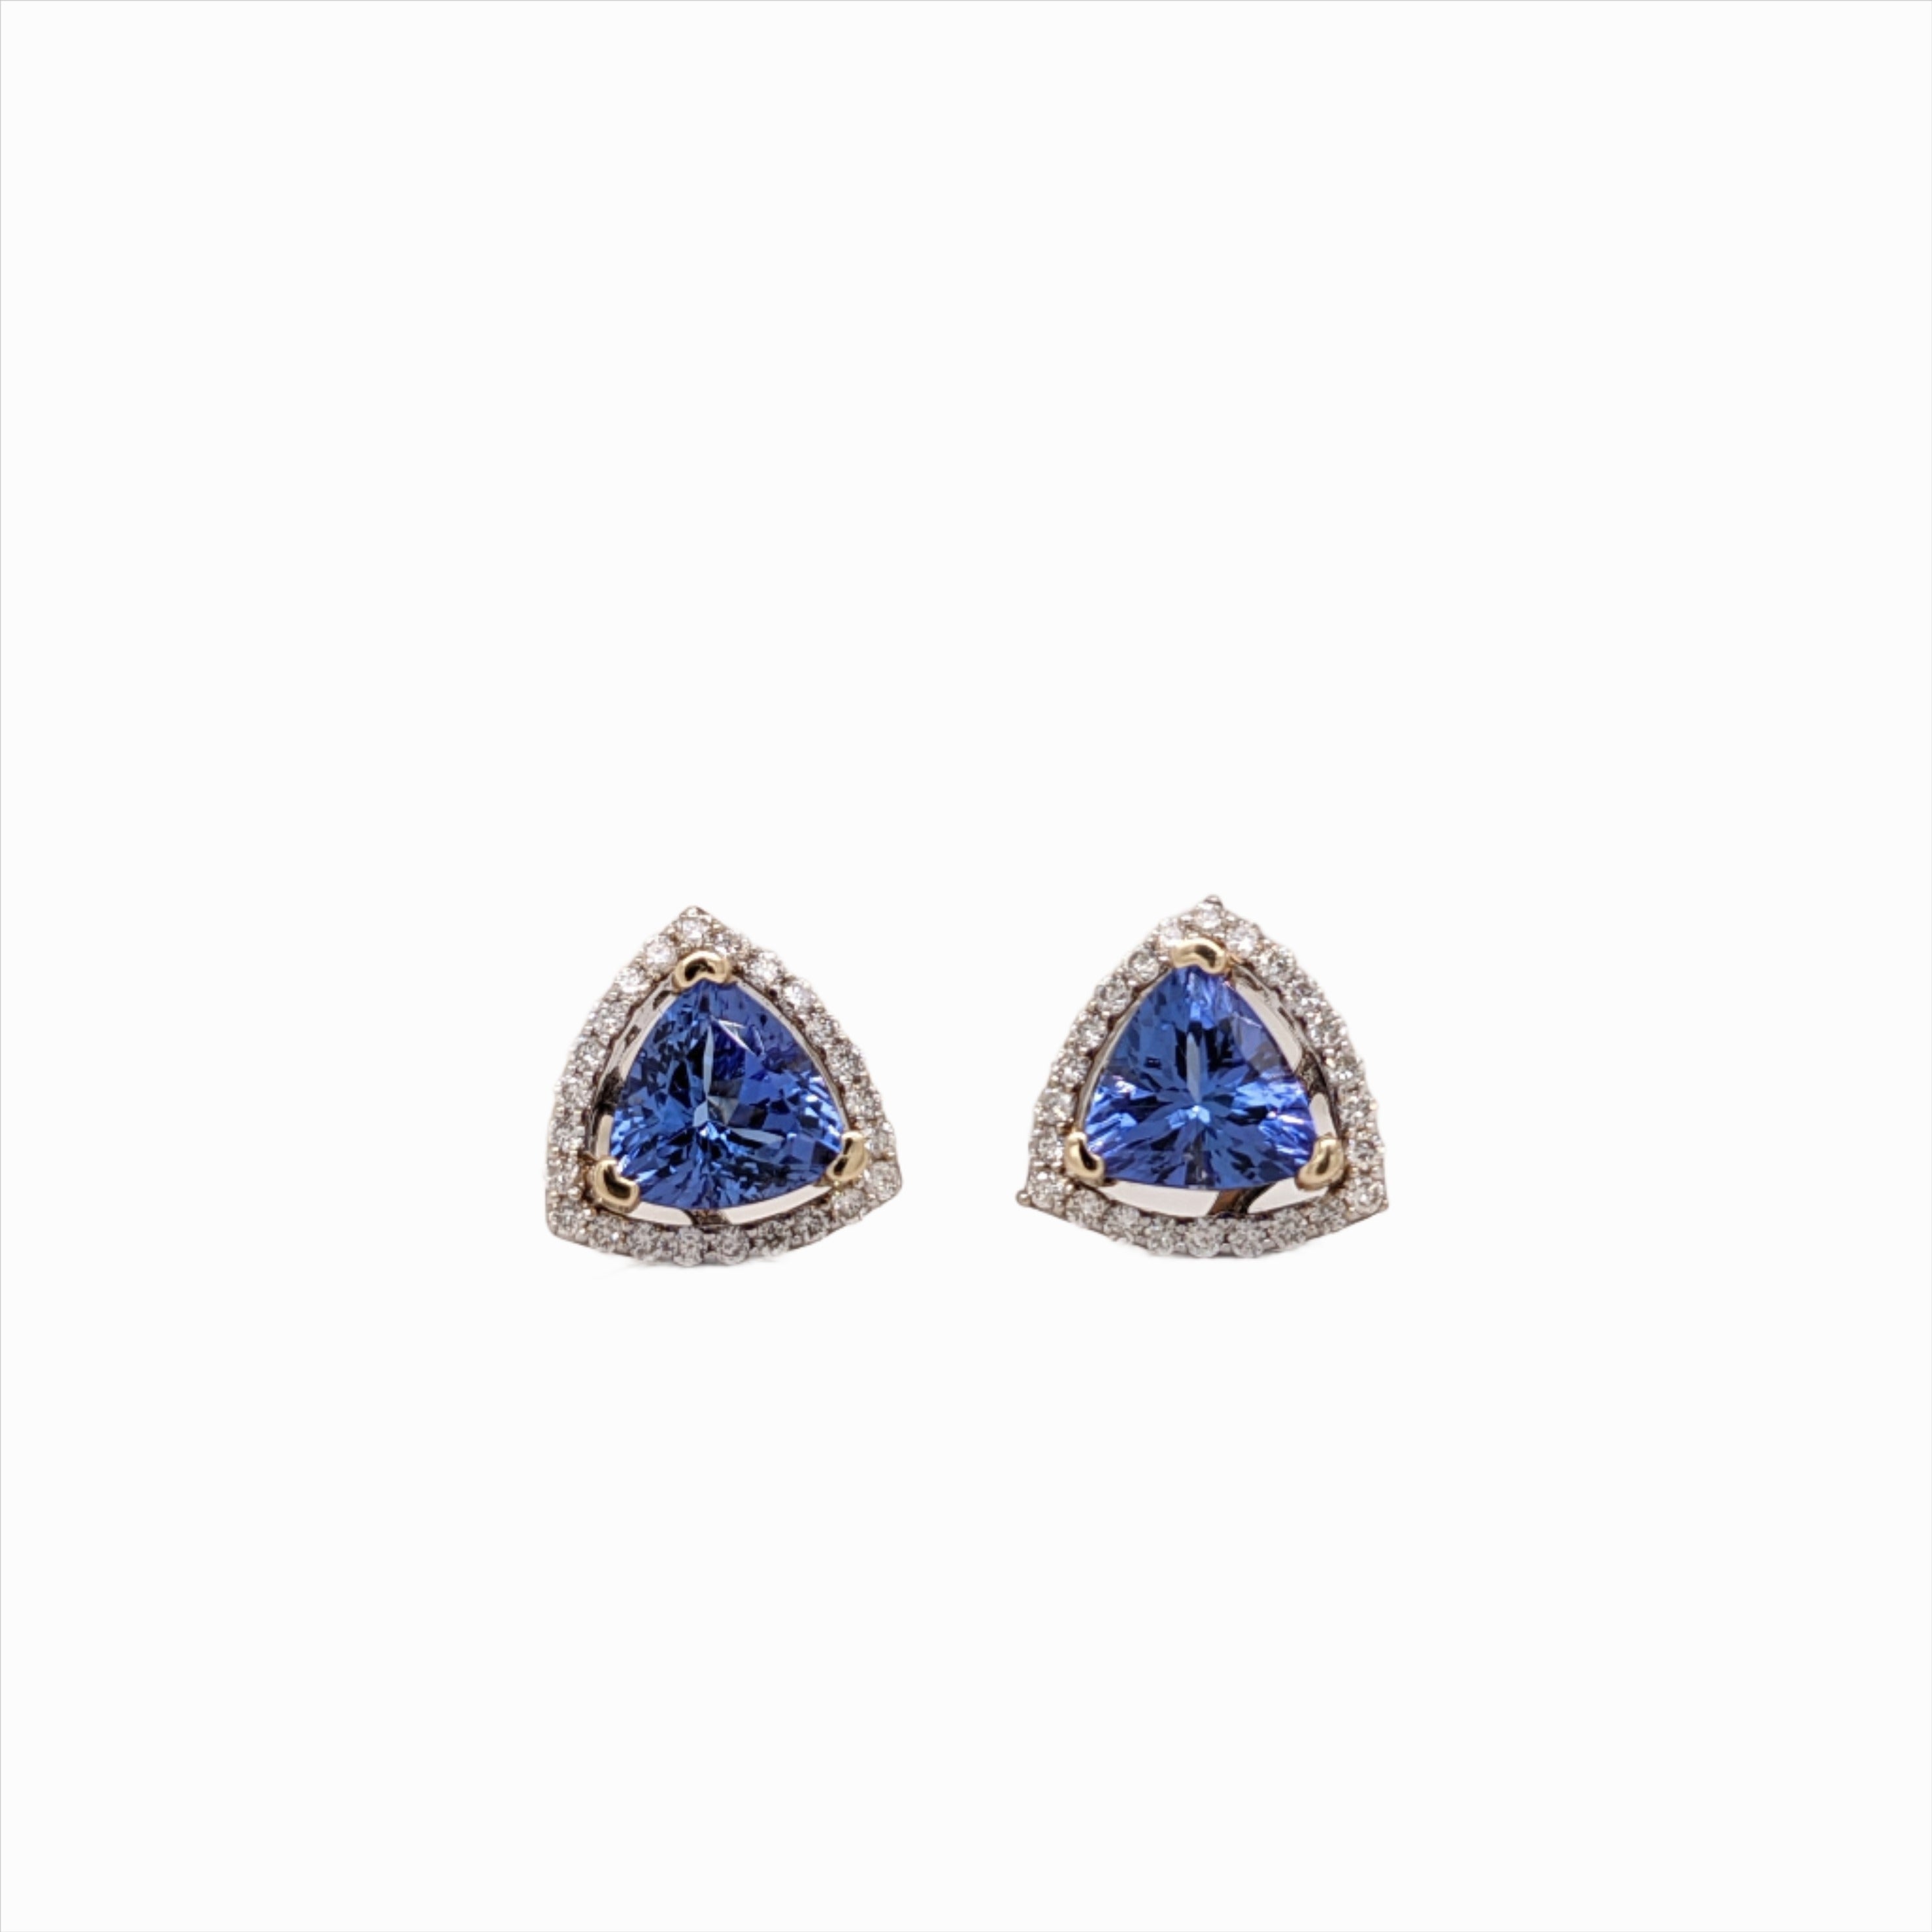 Gorgeous Genuine Tanzanite Earring in 14k Gold w Diamond Halo | Trillion | December Birthstone | Secure Push Backs | Blue Gemstone Studs